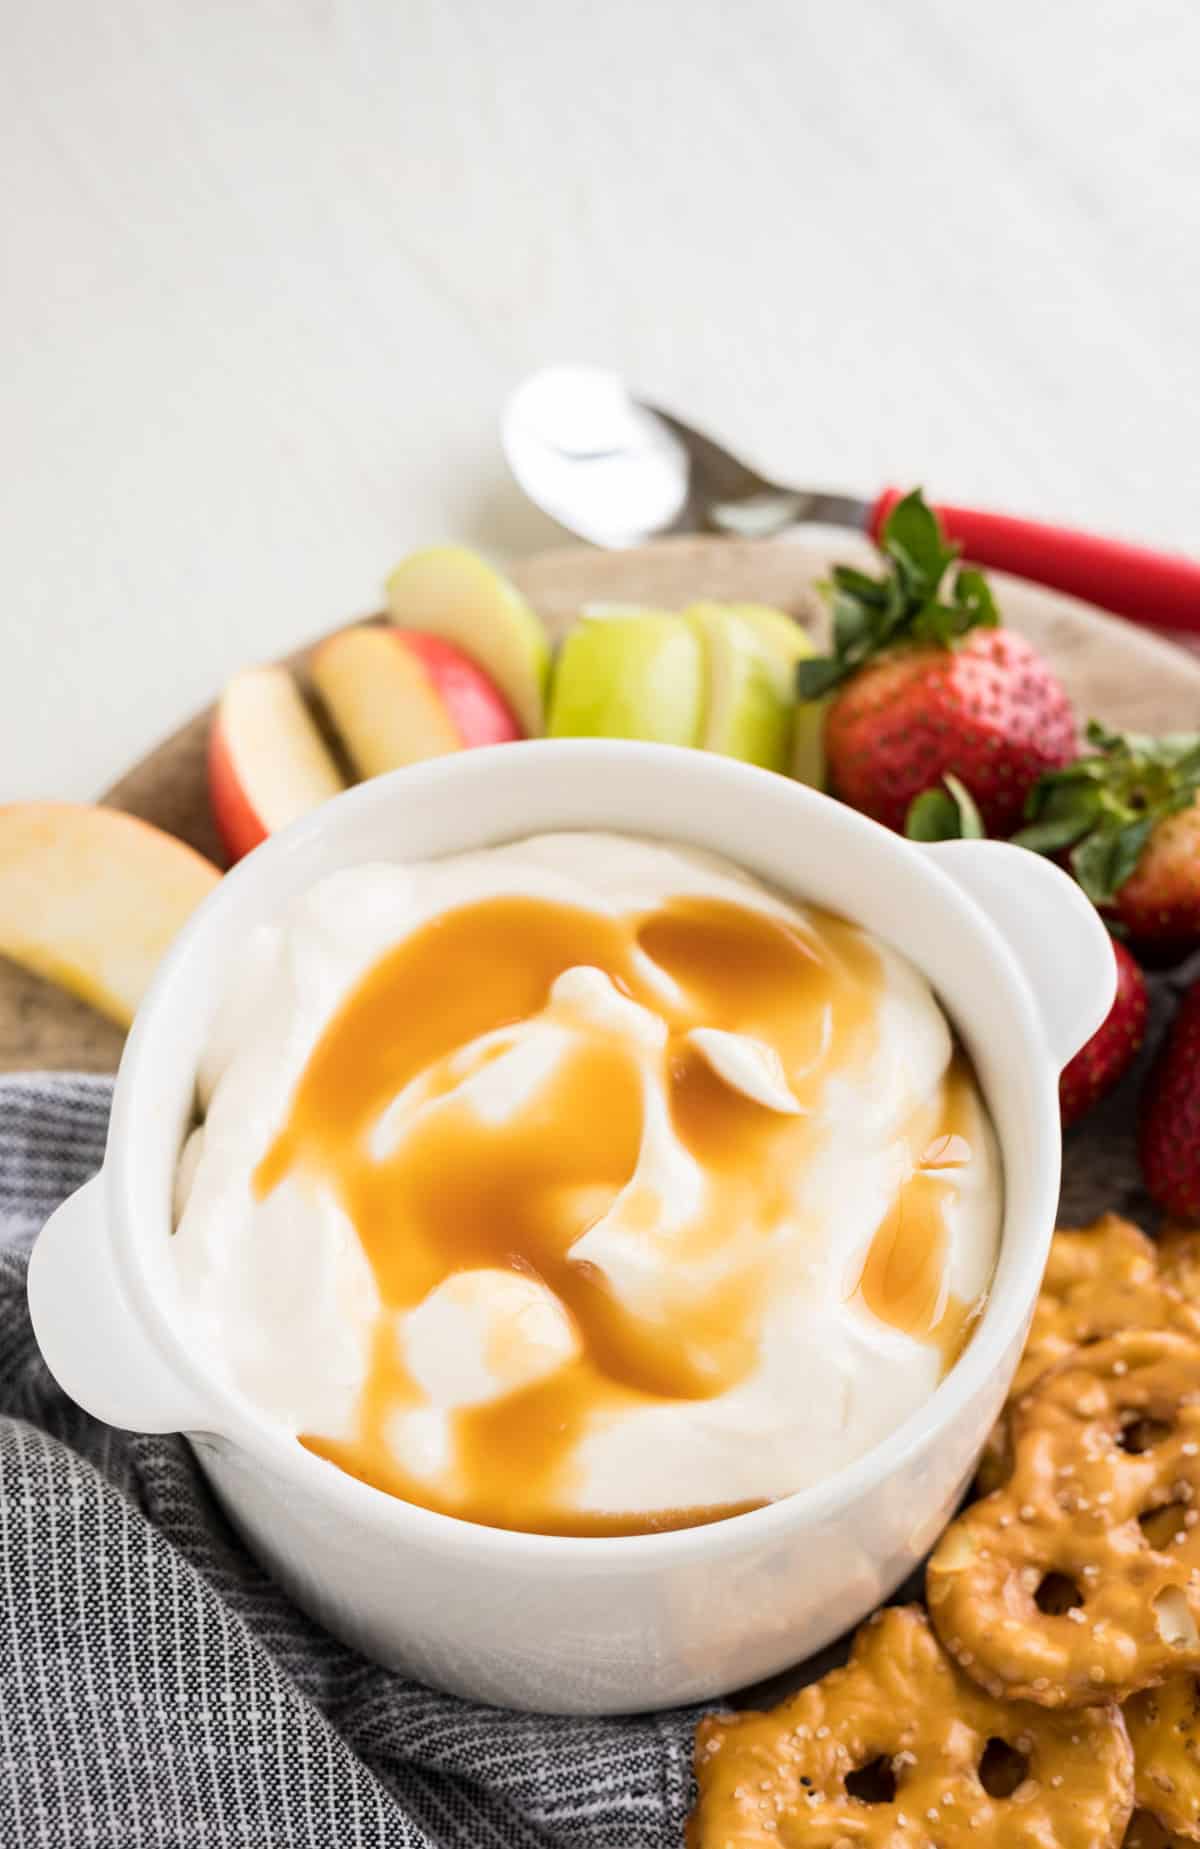 A dish with Greek yogurt fruit dip.